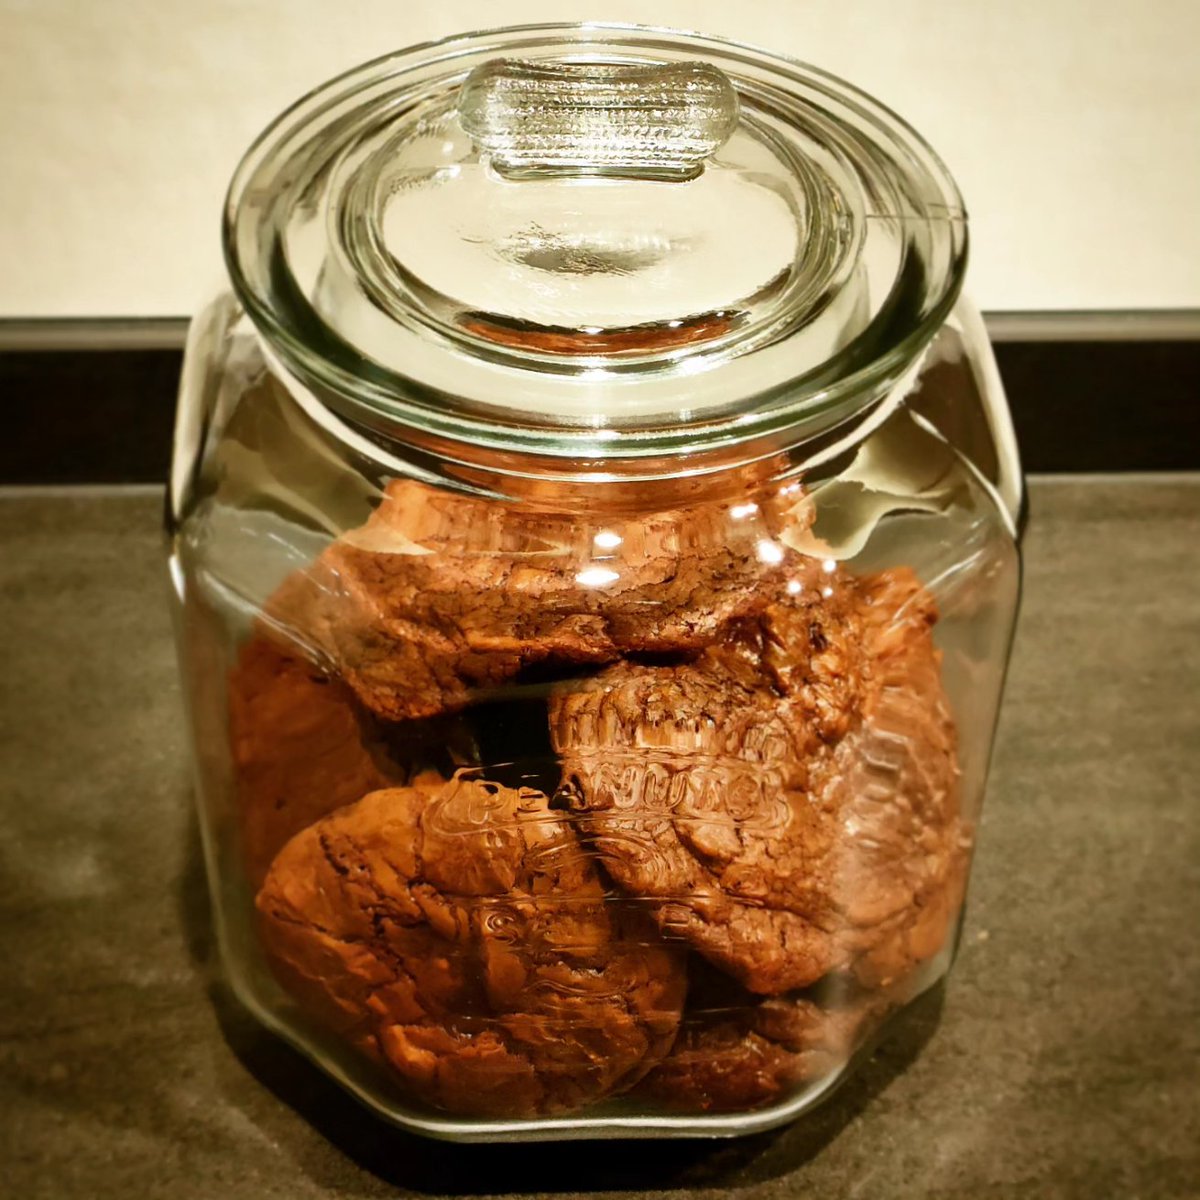 Fudgy Brownie Cookies作ったよ〜🍪
さっくりしっとり、中からチョコがとろ〜んてyummy🤤🍫

#fudgybrowniecookies #chocolate #brownies #cookies #chocoholic #homemade #americanrecipe #madefromscratch